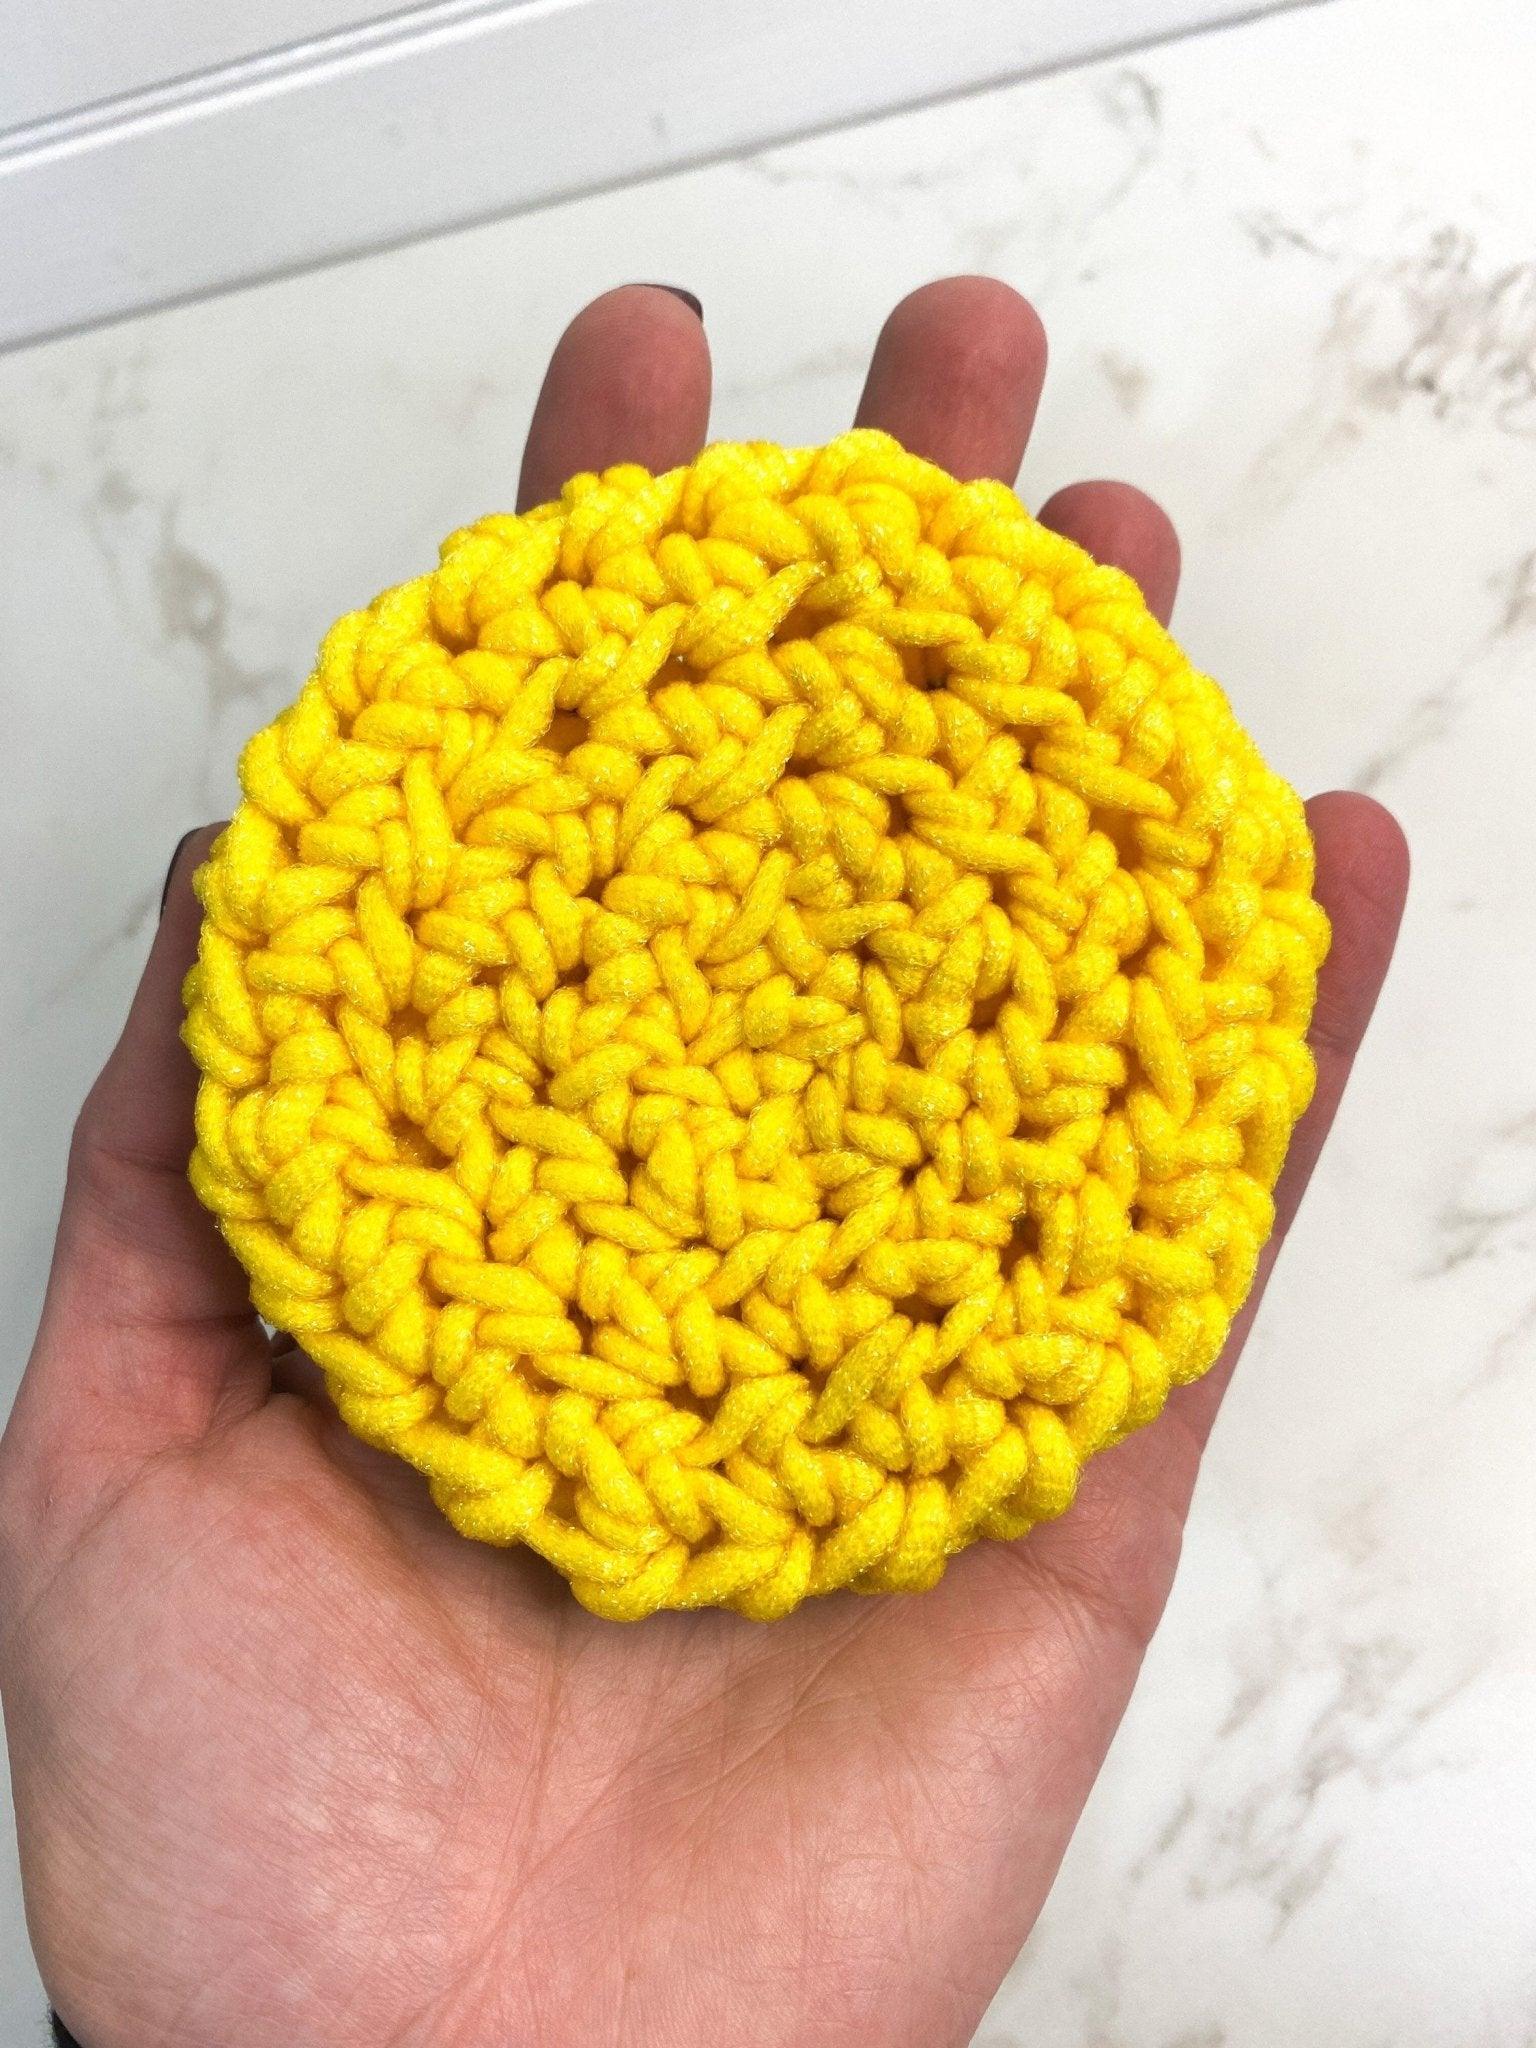 Human Hand Holding Bright Yellow Crochet Dish Scrubby